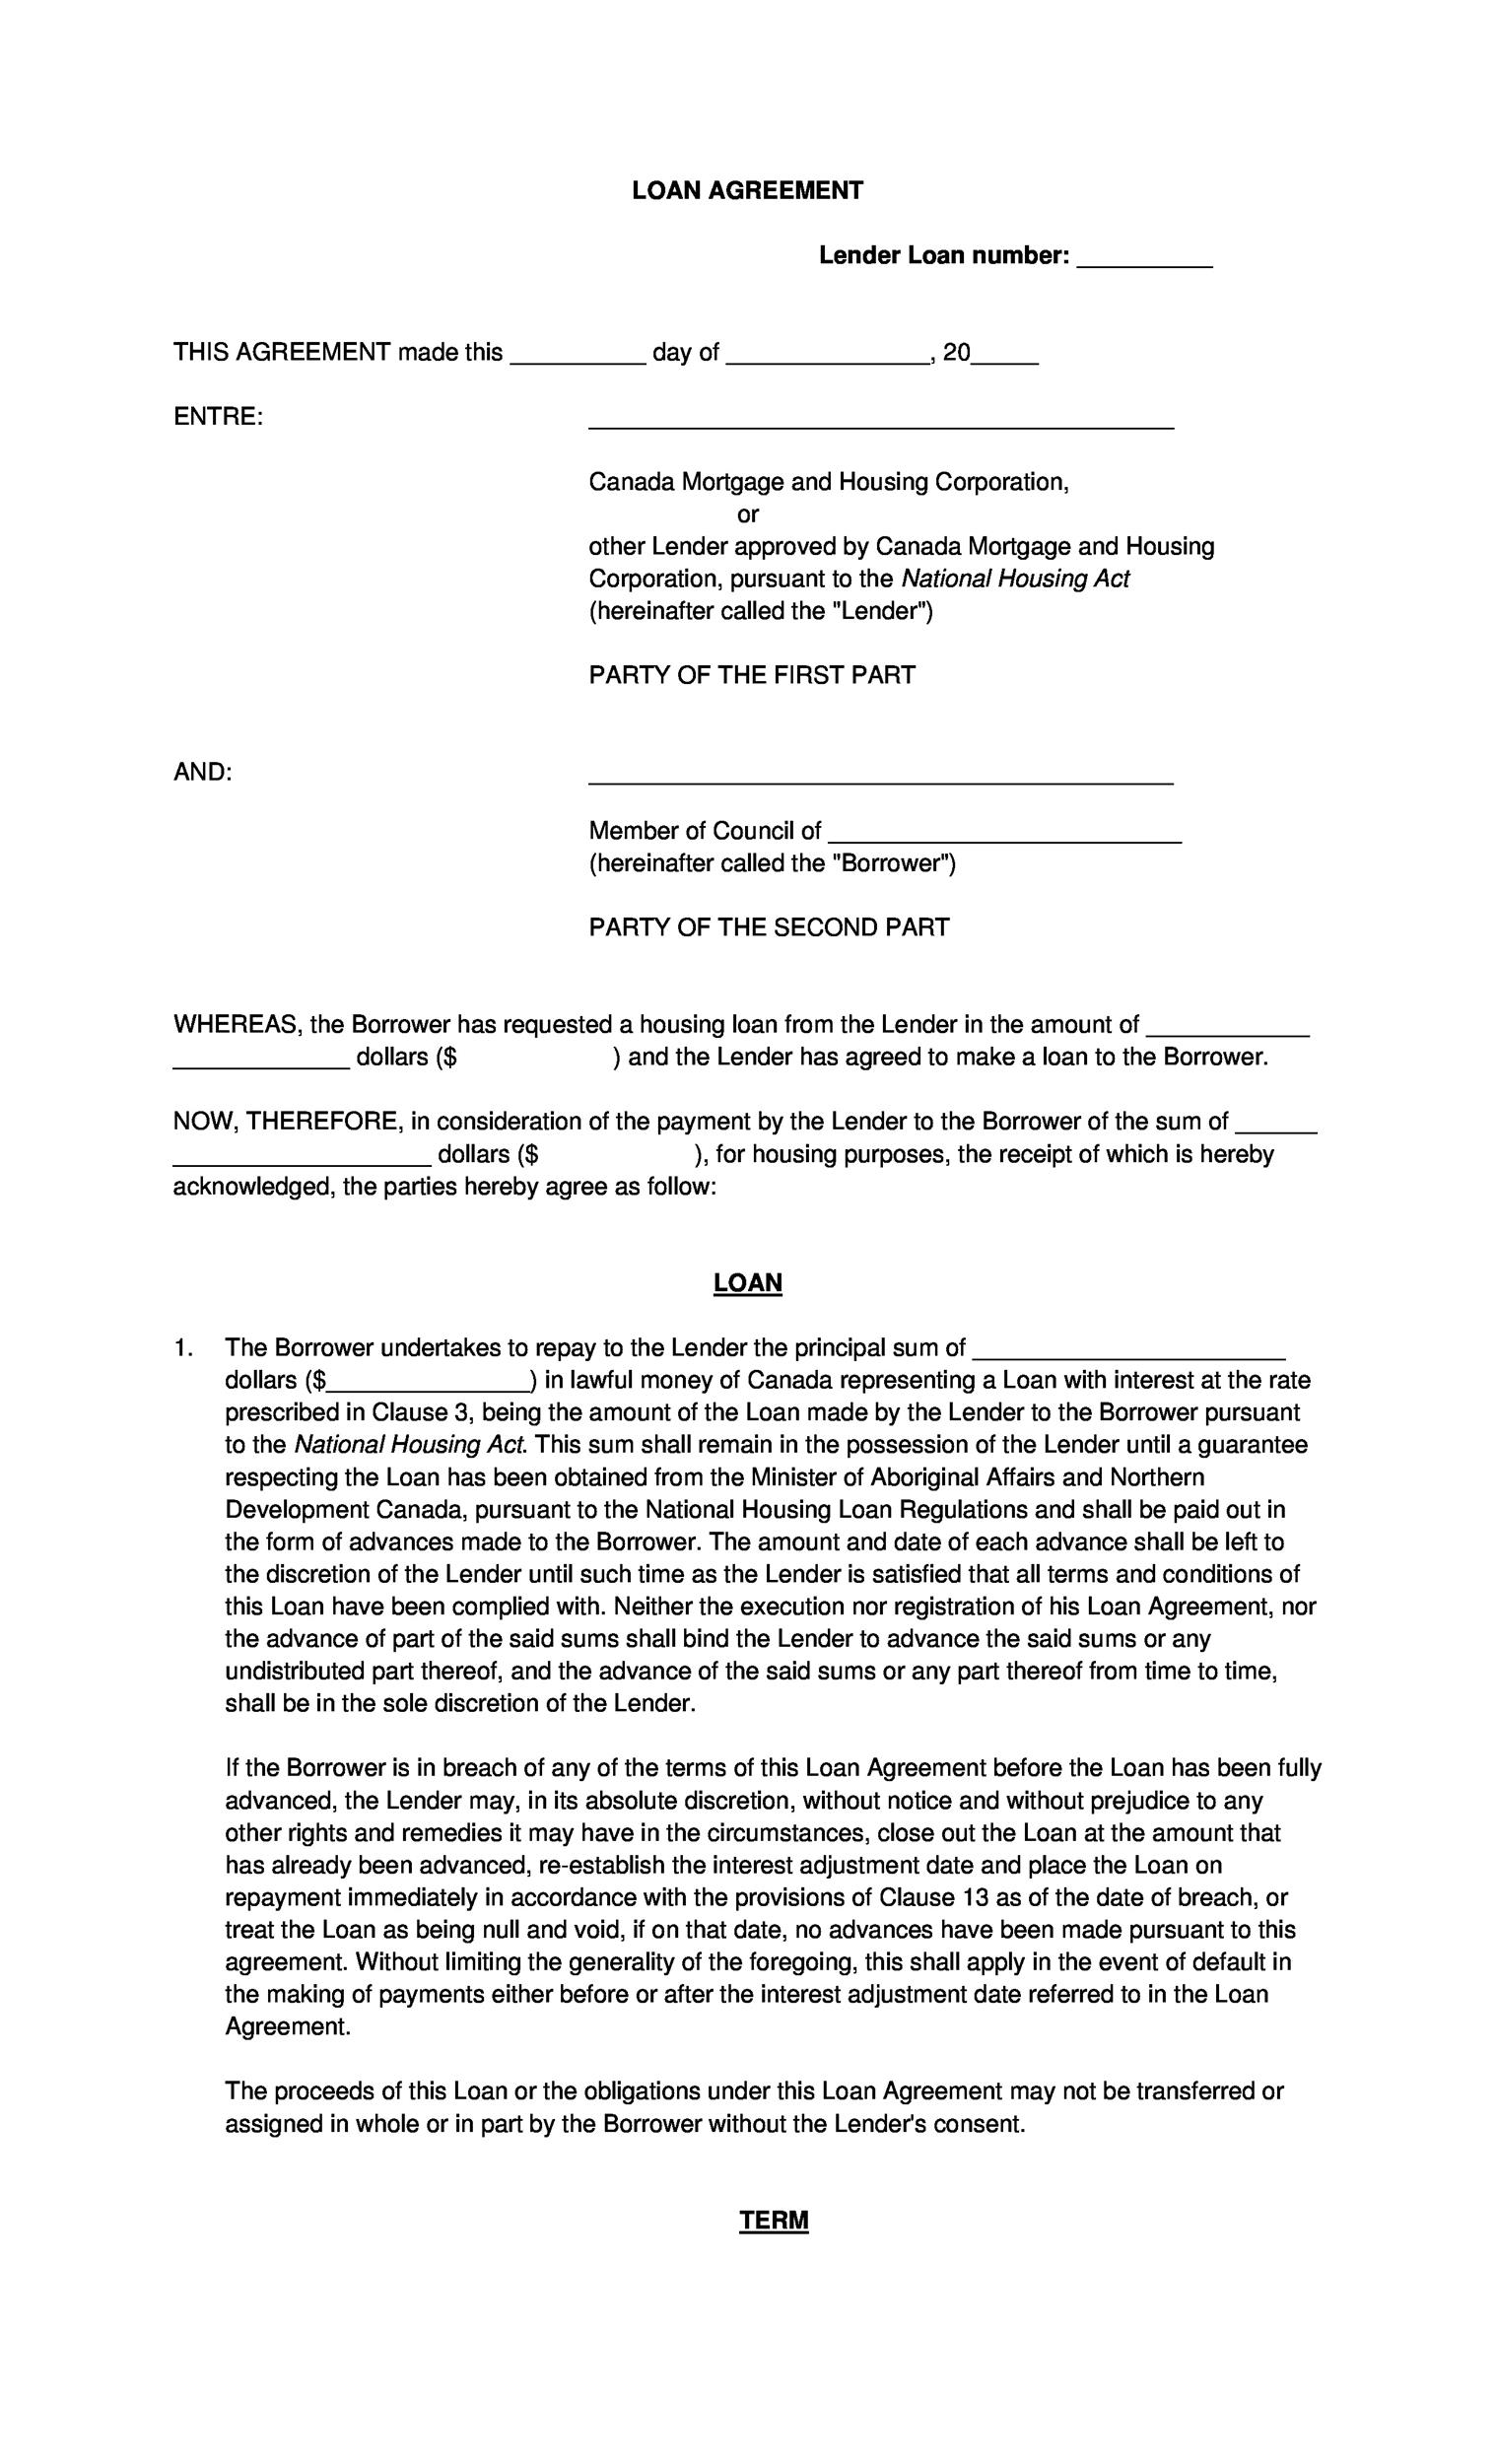 40-free-loan-agreement-templates-word-pdf-templatelab